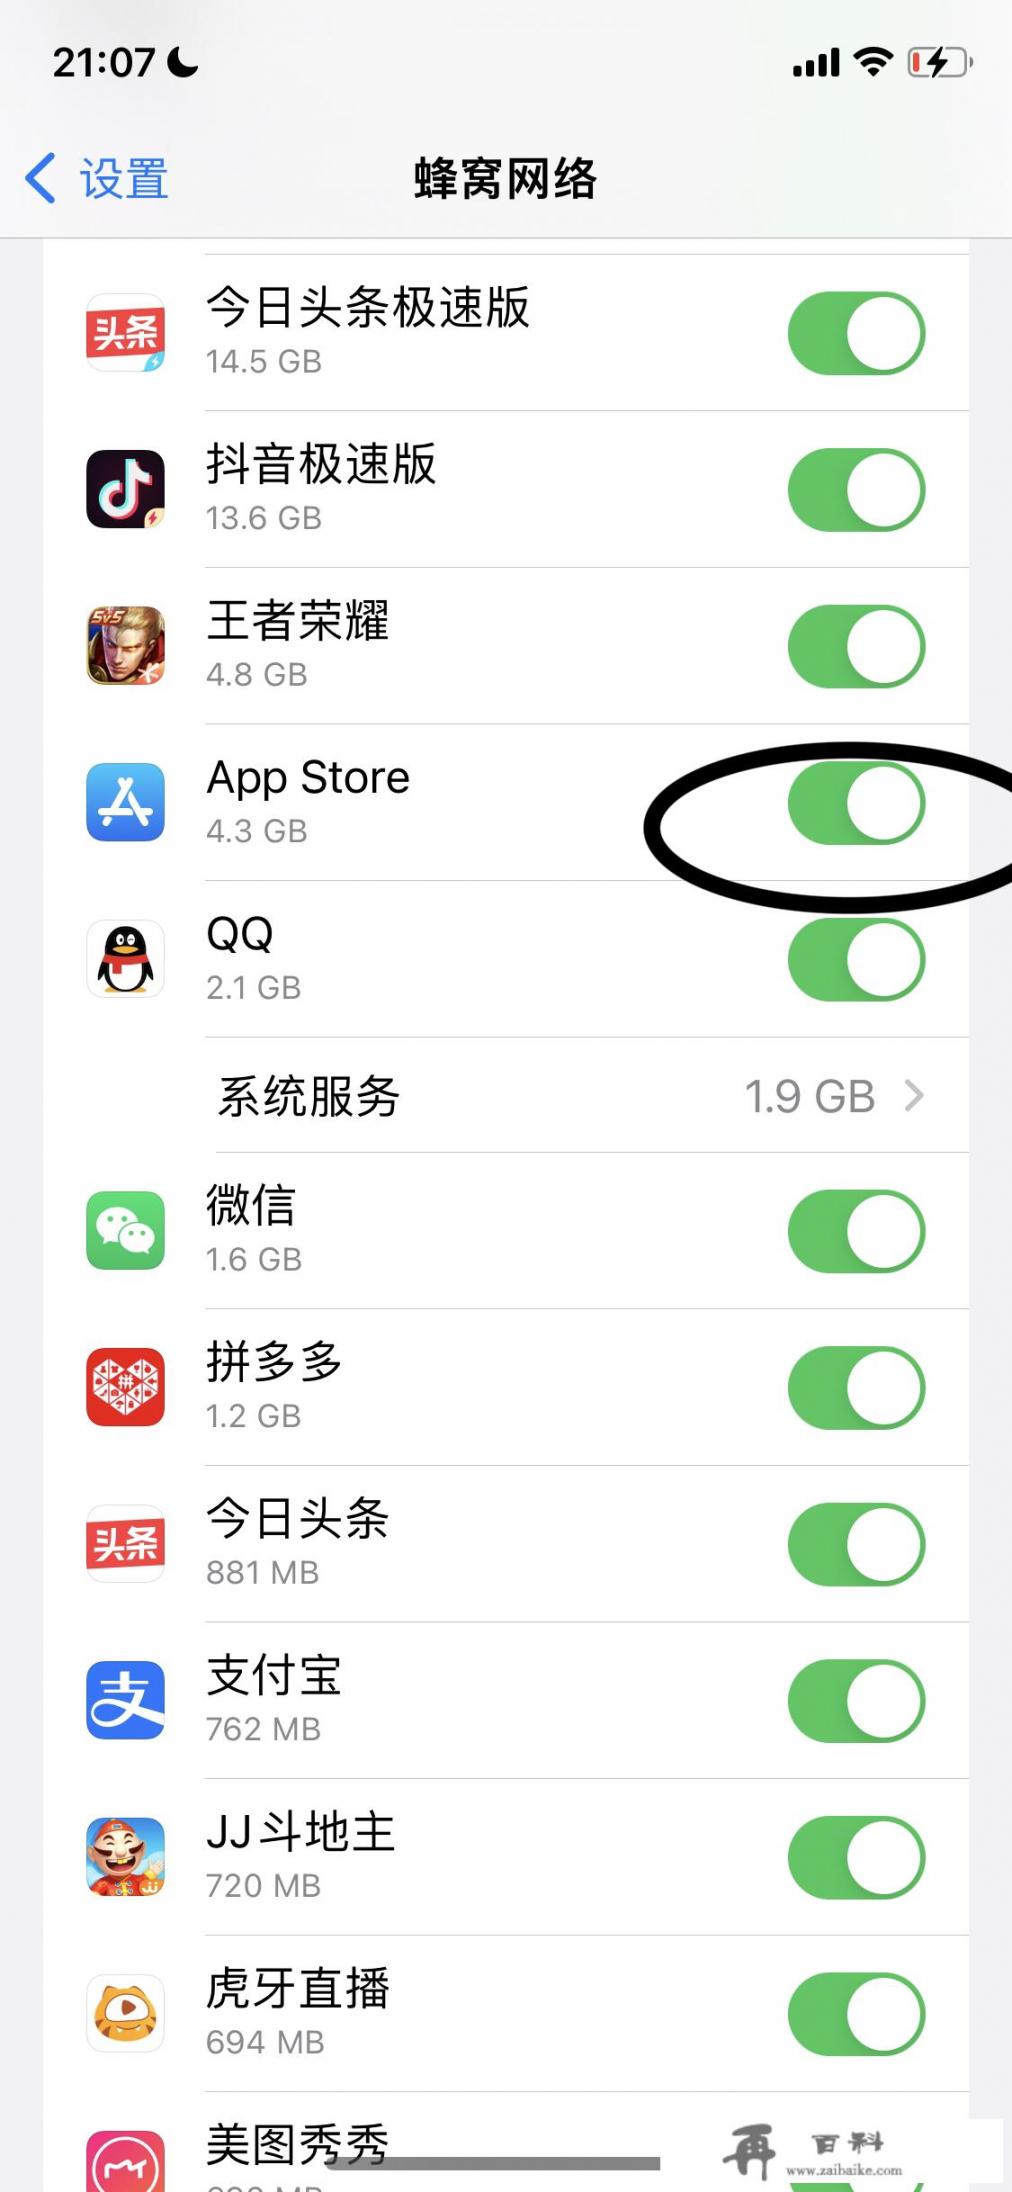 app store1直转圈圈怎么办？